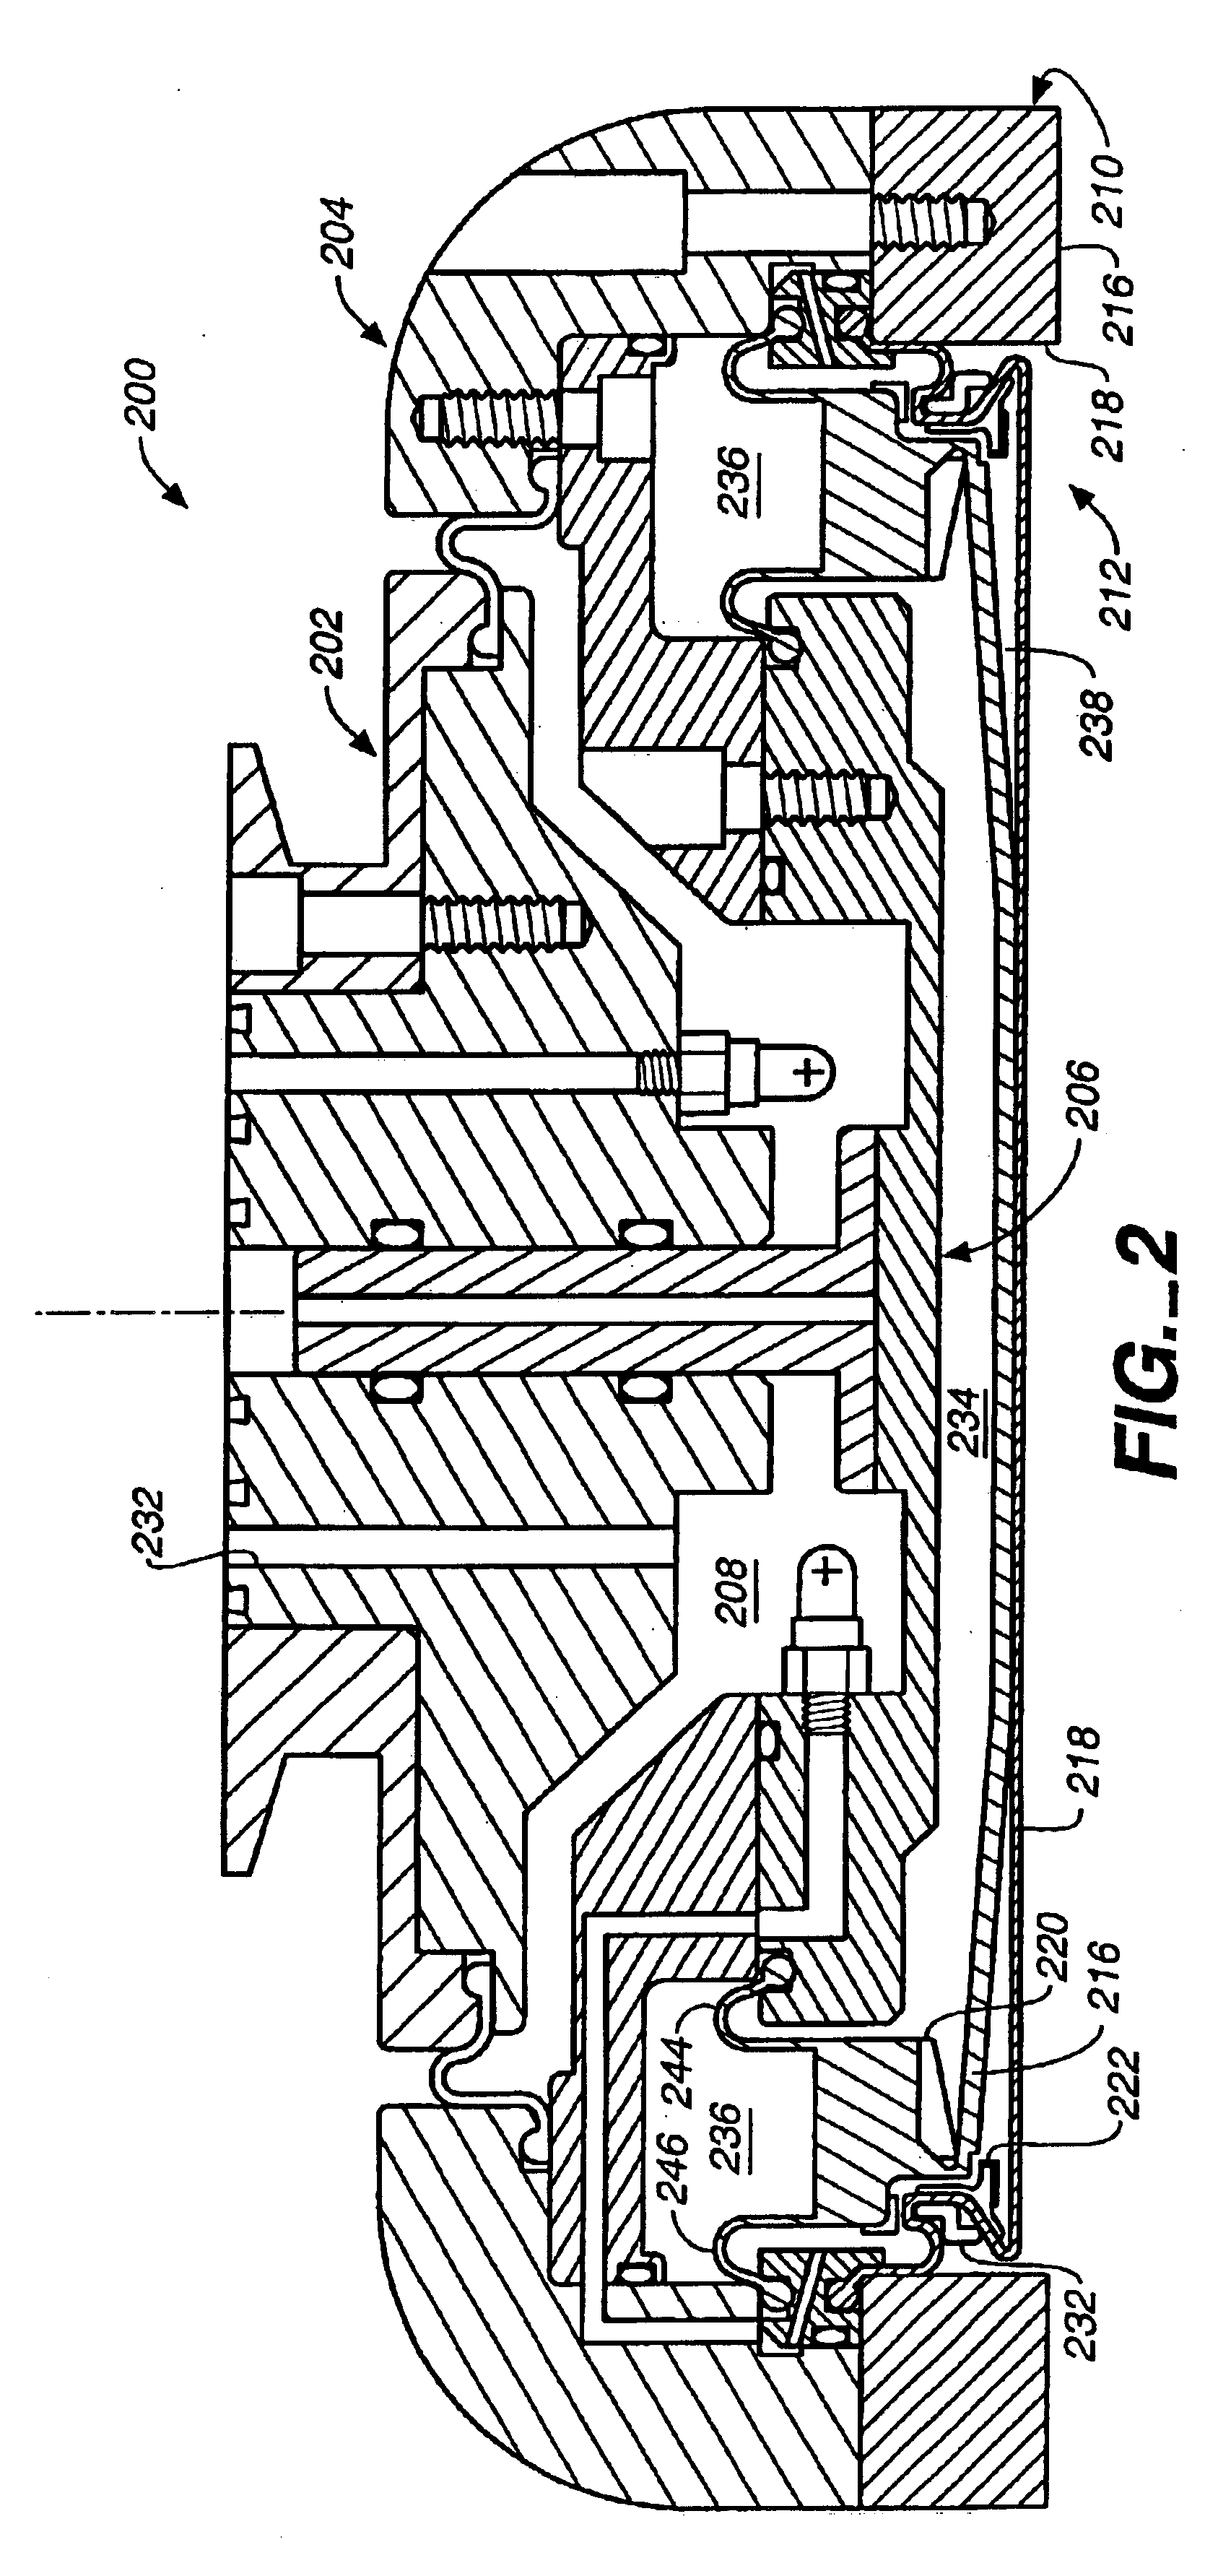 Chemical mechanical polishing of a metal layer with polishing rate monitoring